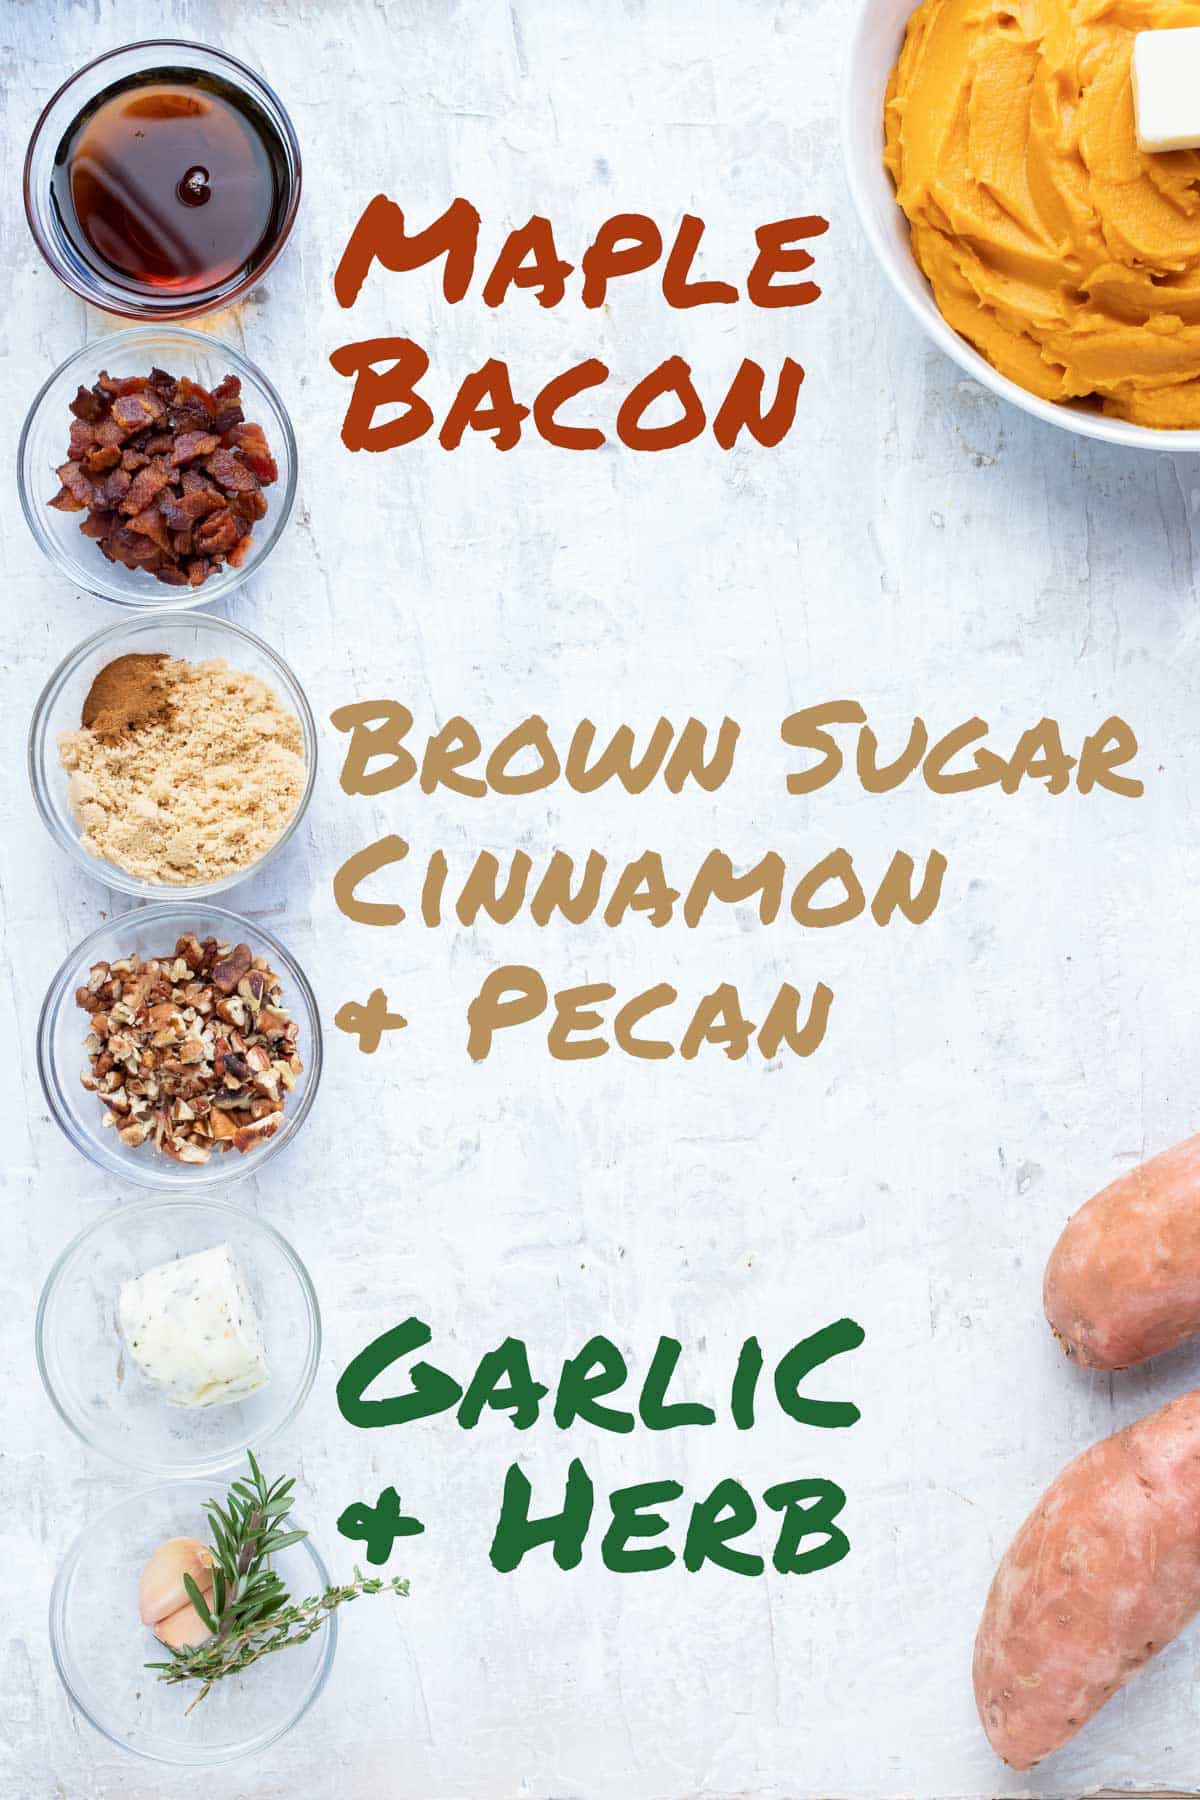 Maple bacon, brown sugar pecan, garlic and herb mashed sweet potato flavors.